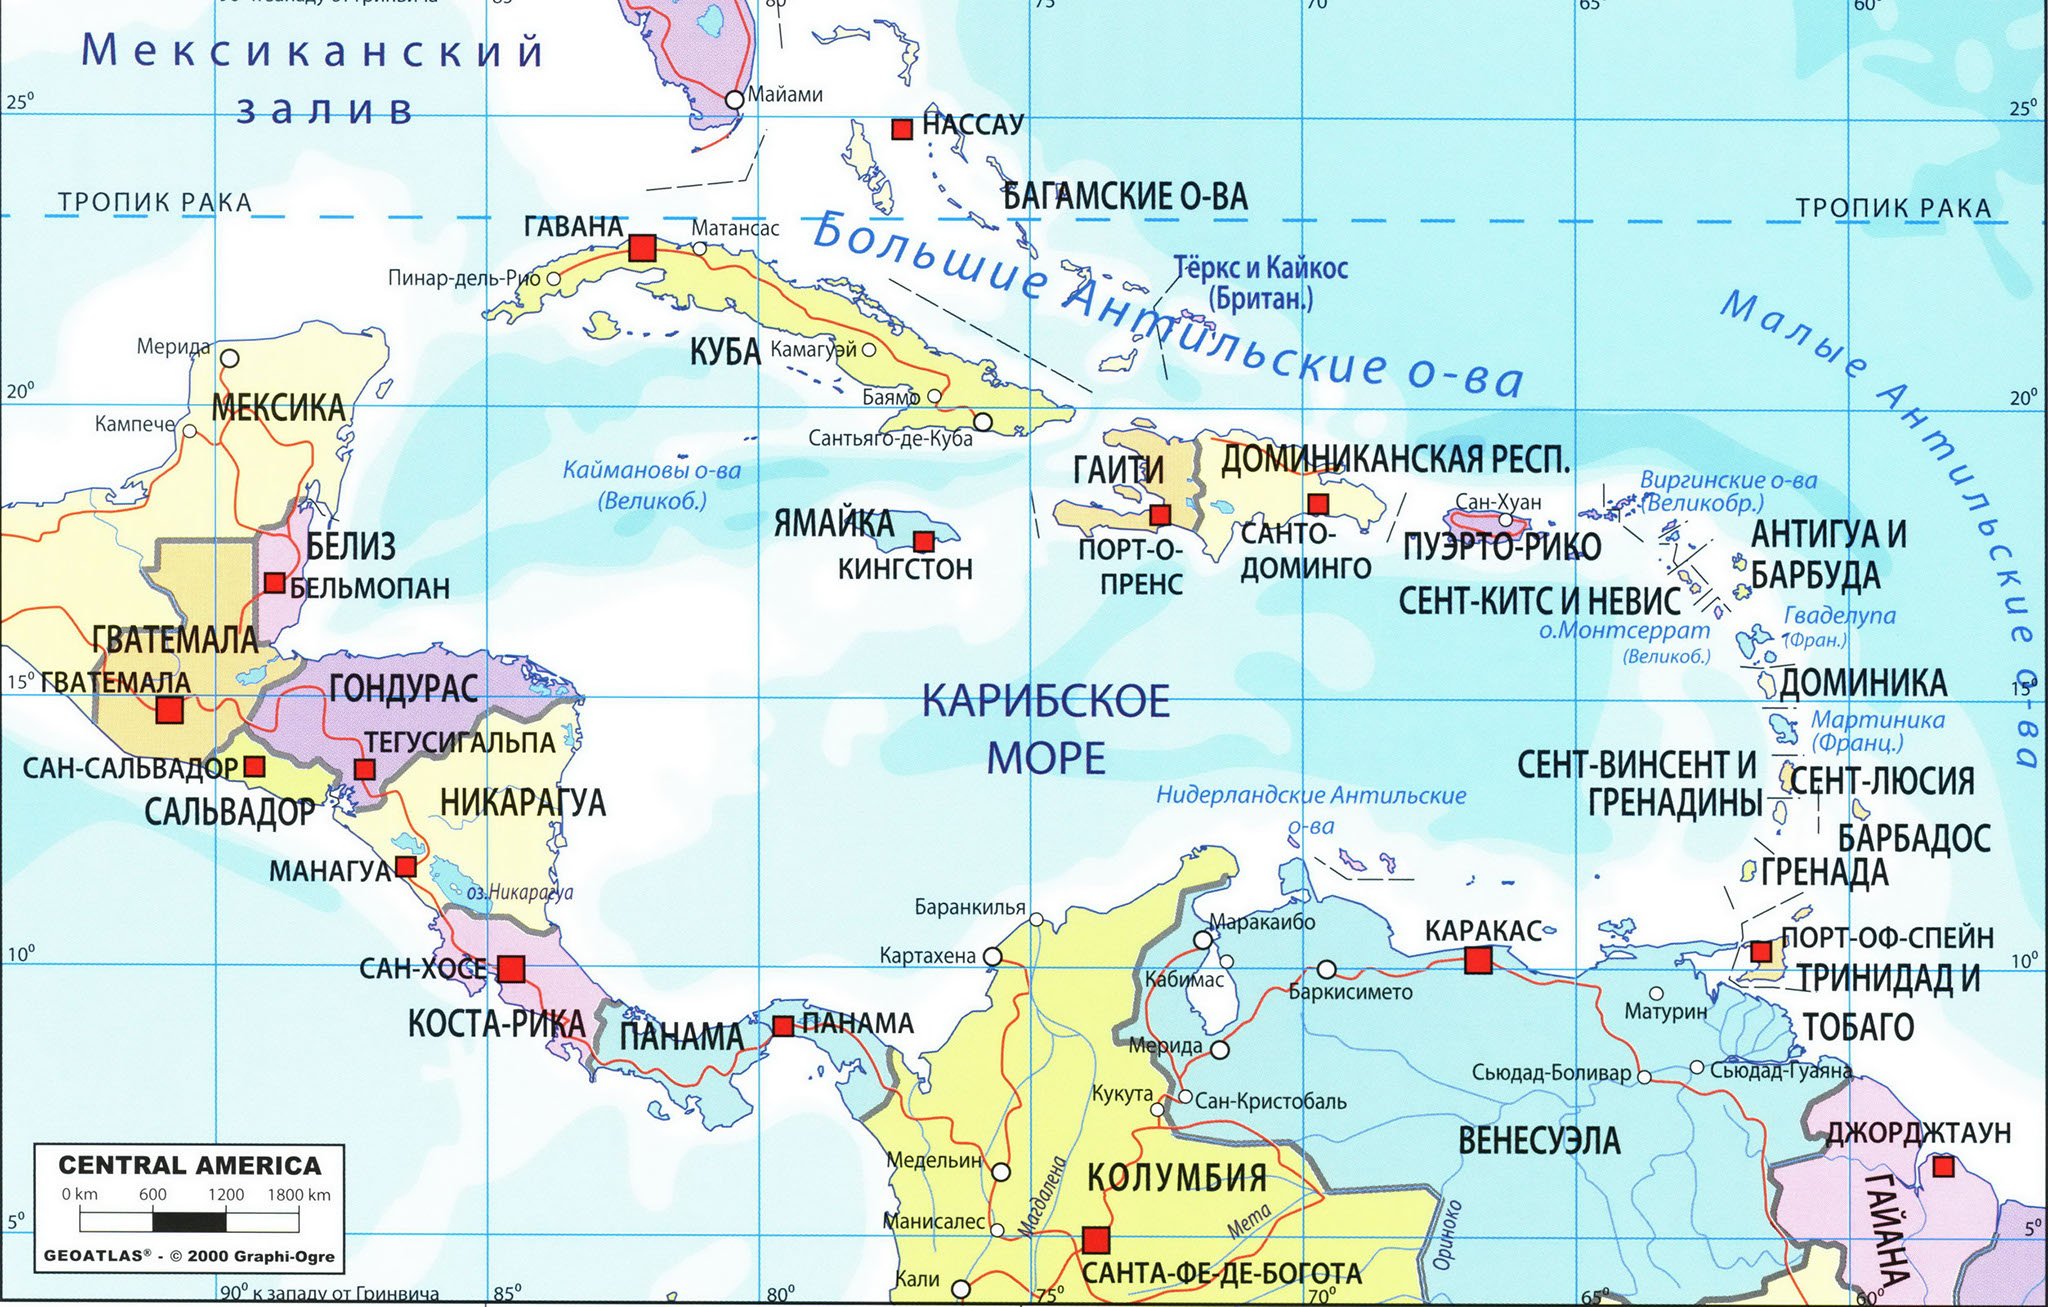 Столица кубы на карте. Острова Карибского моря на карте. Карибское море на карте Северной Америки. Острова Карибского бассейна на карте Северной Америки. Острова Карибского моря карта политическая.